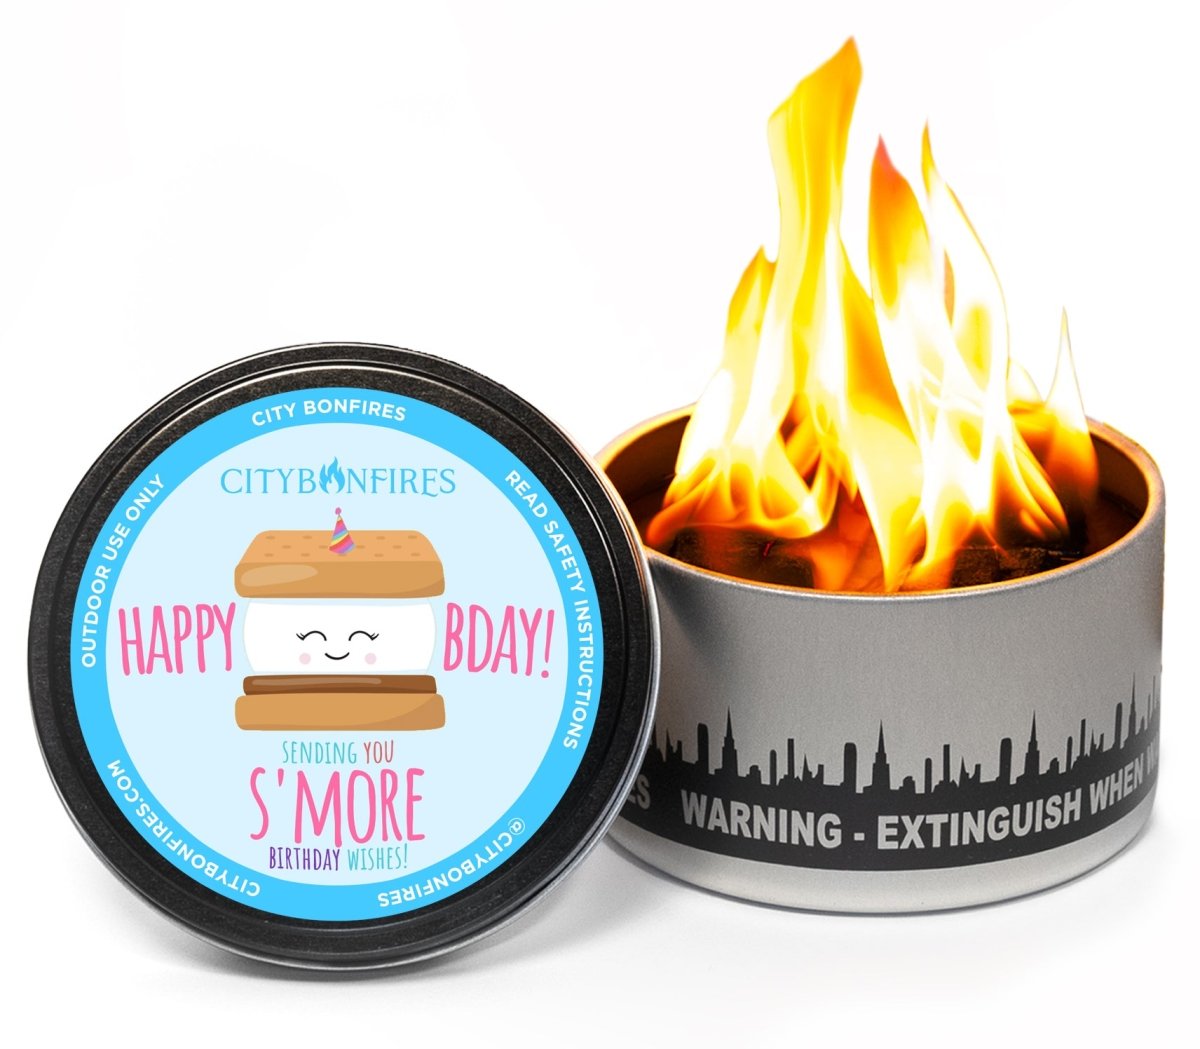 City Bonfire - Happy Birthday Edition - City Bonfires